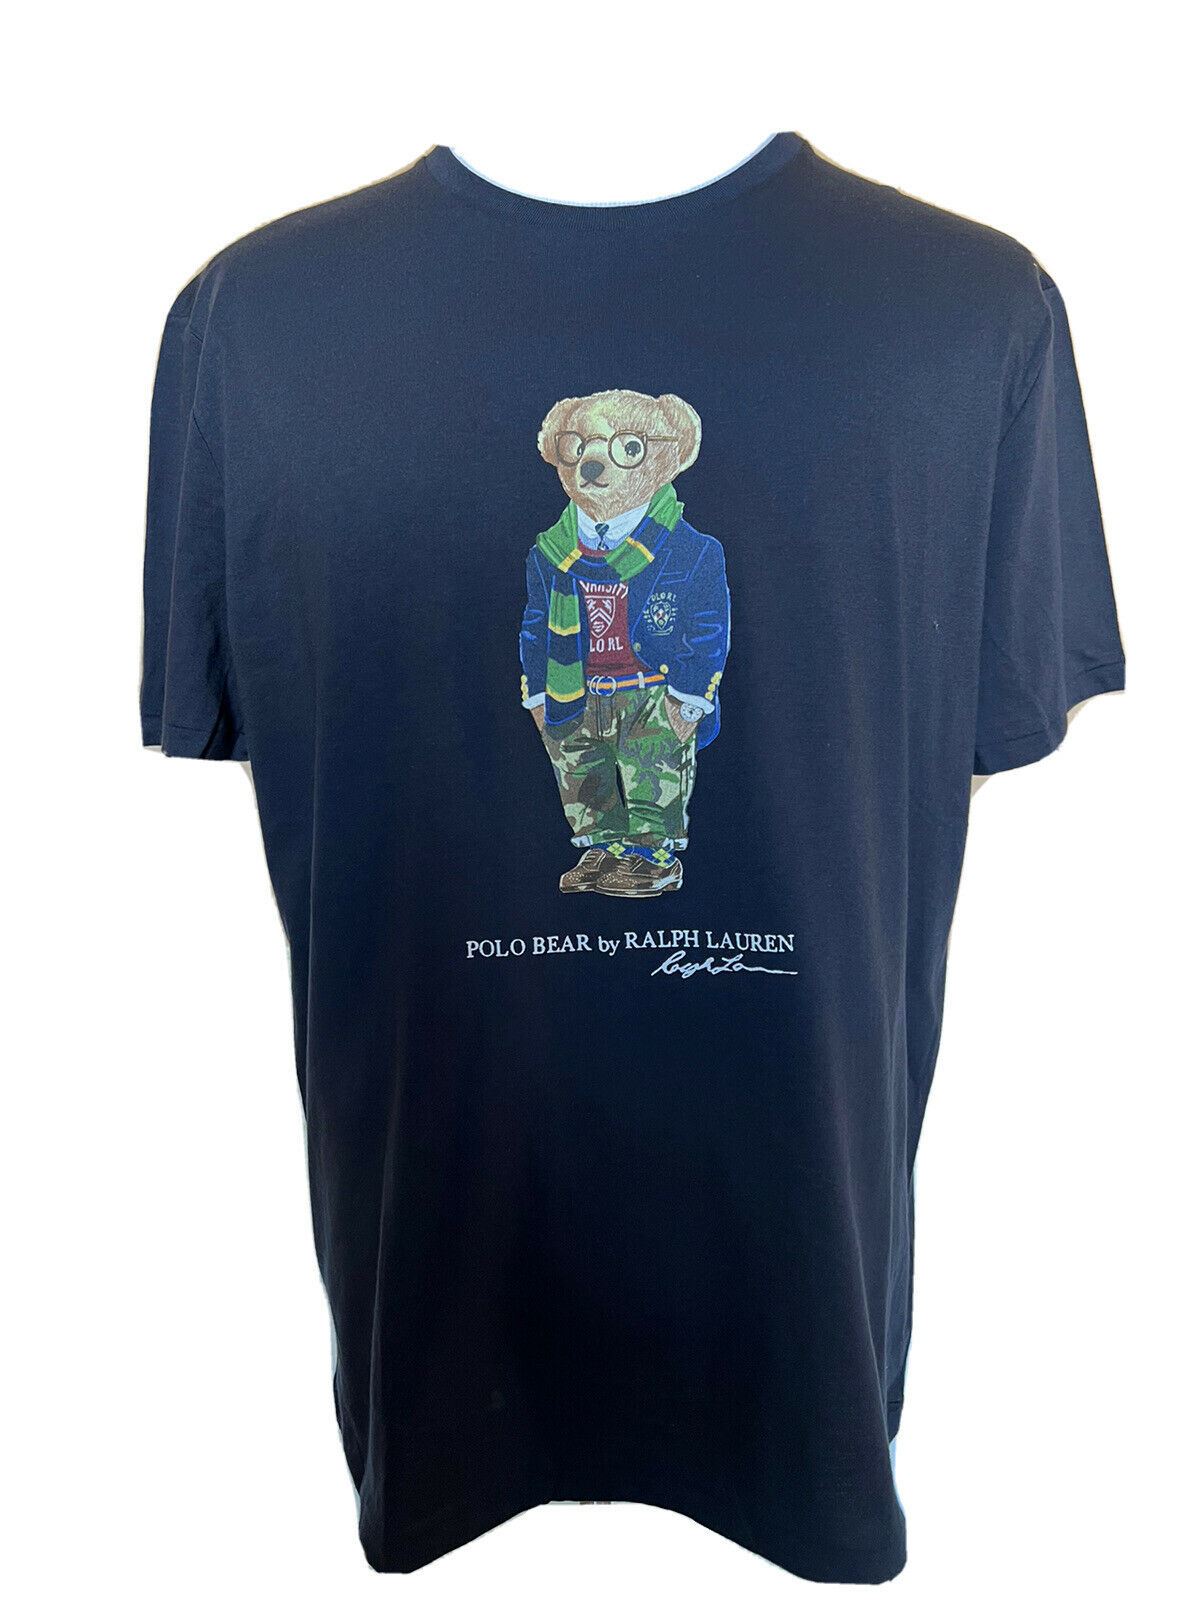 NWT 59.50 Polo Ralph Lauren Bear T-Shirt Blue Medium